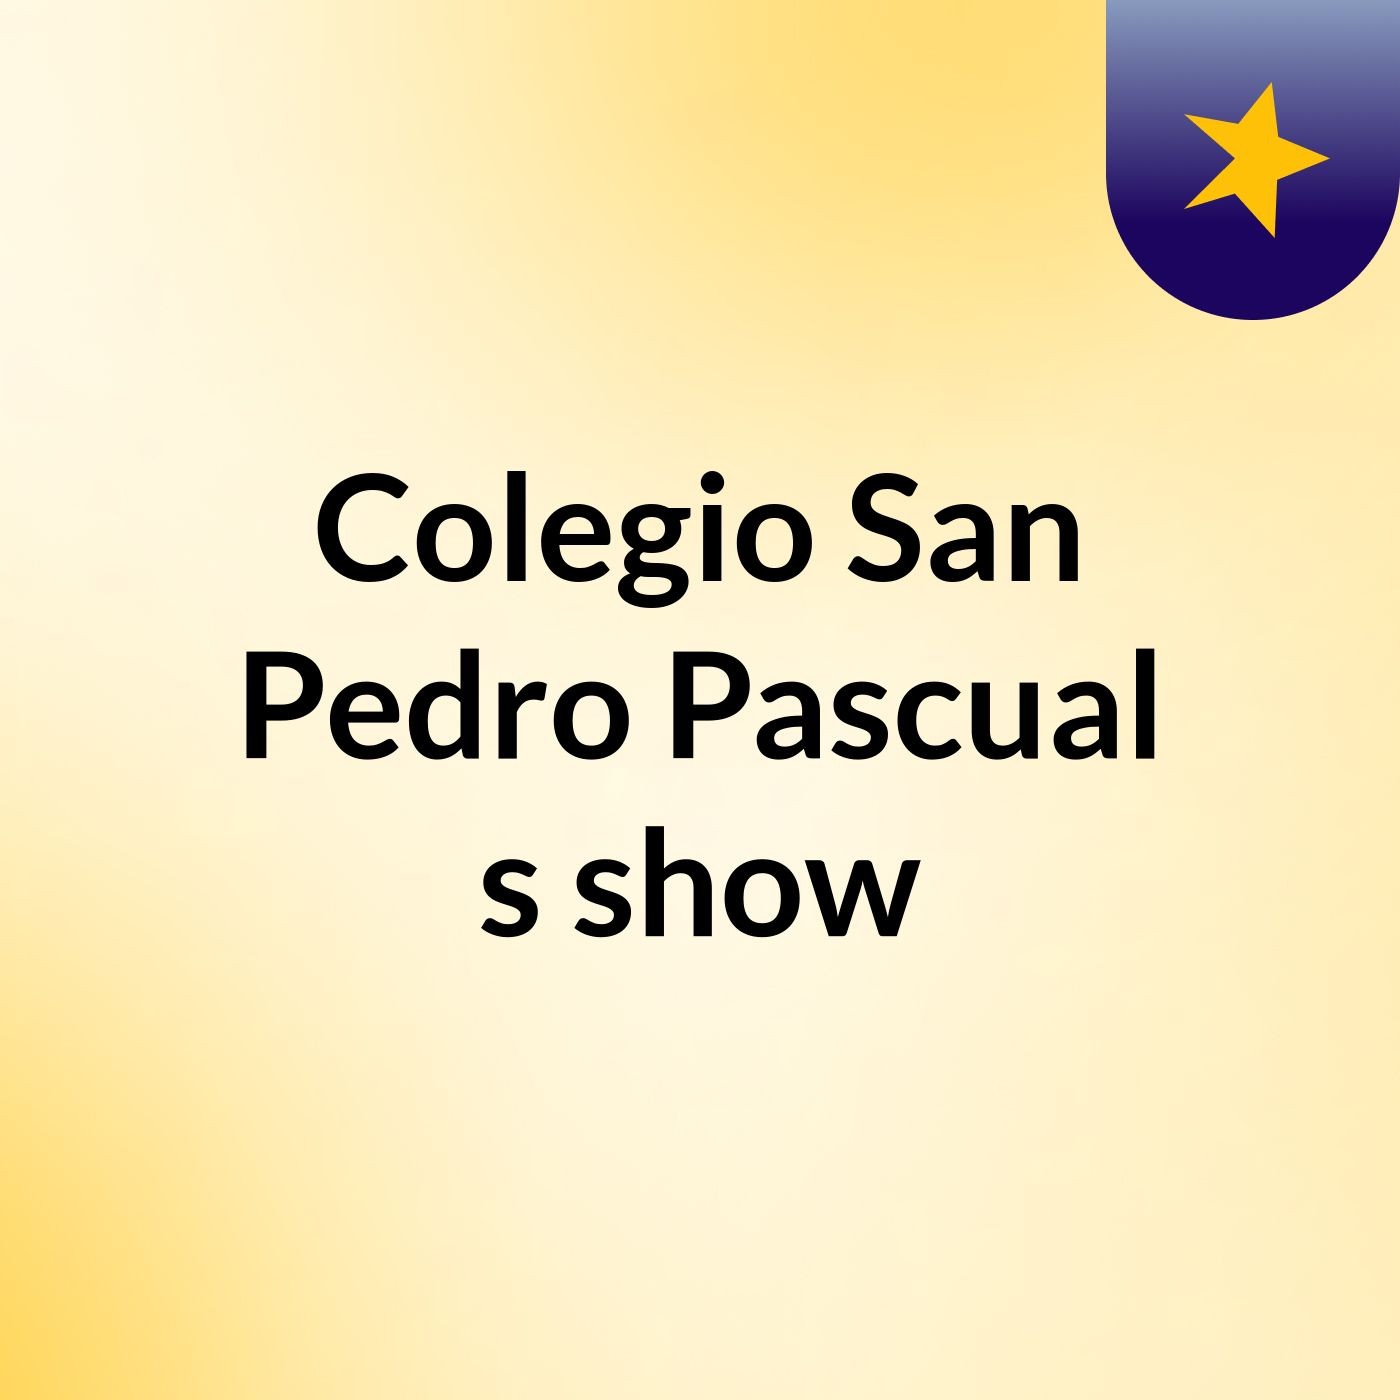 Colegio San Pedro Pascual's show